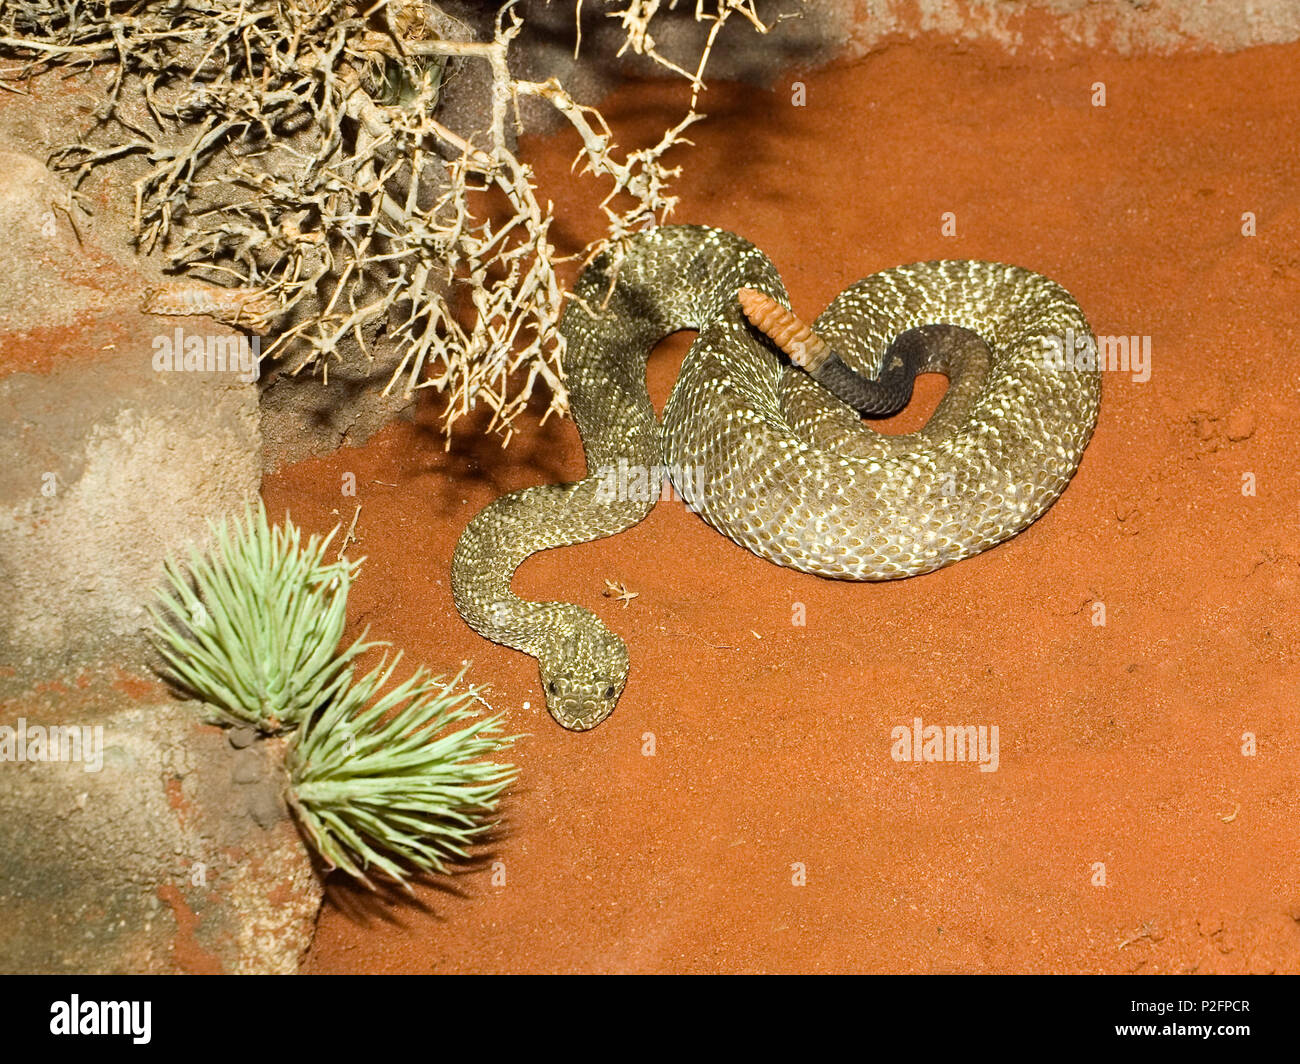 Rattlesnake, Crotalus vegrandis, South America, captive Stock Photo